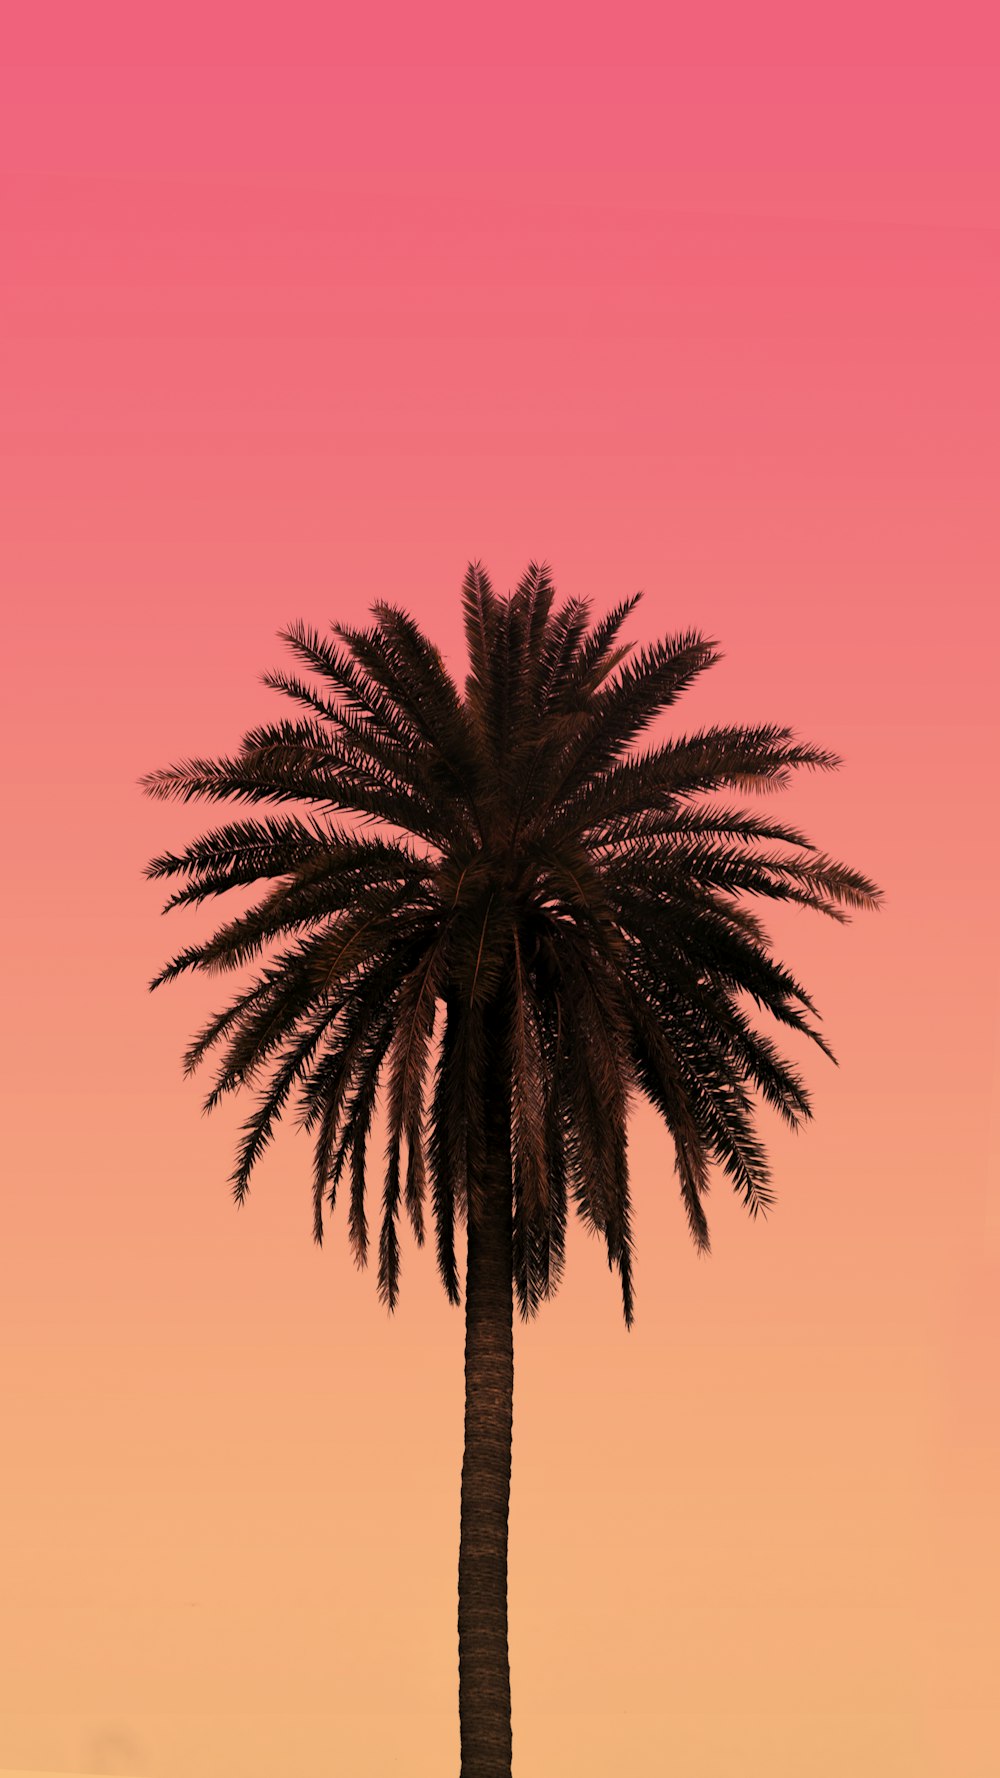 green palm tree under orange sky